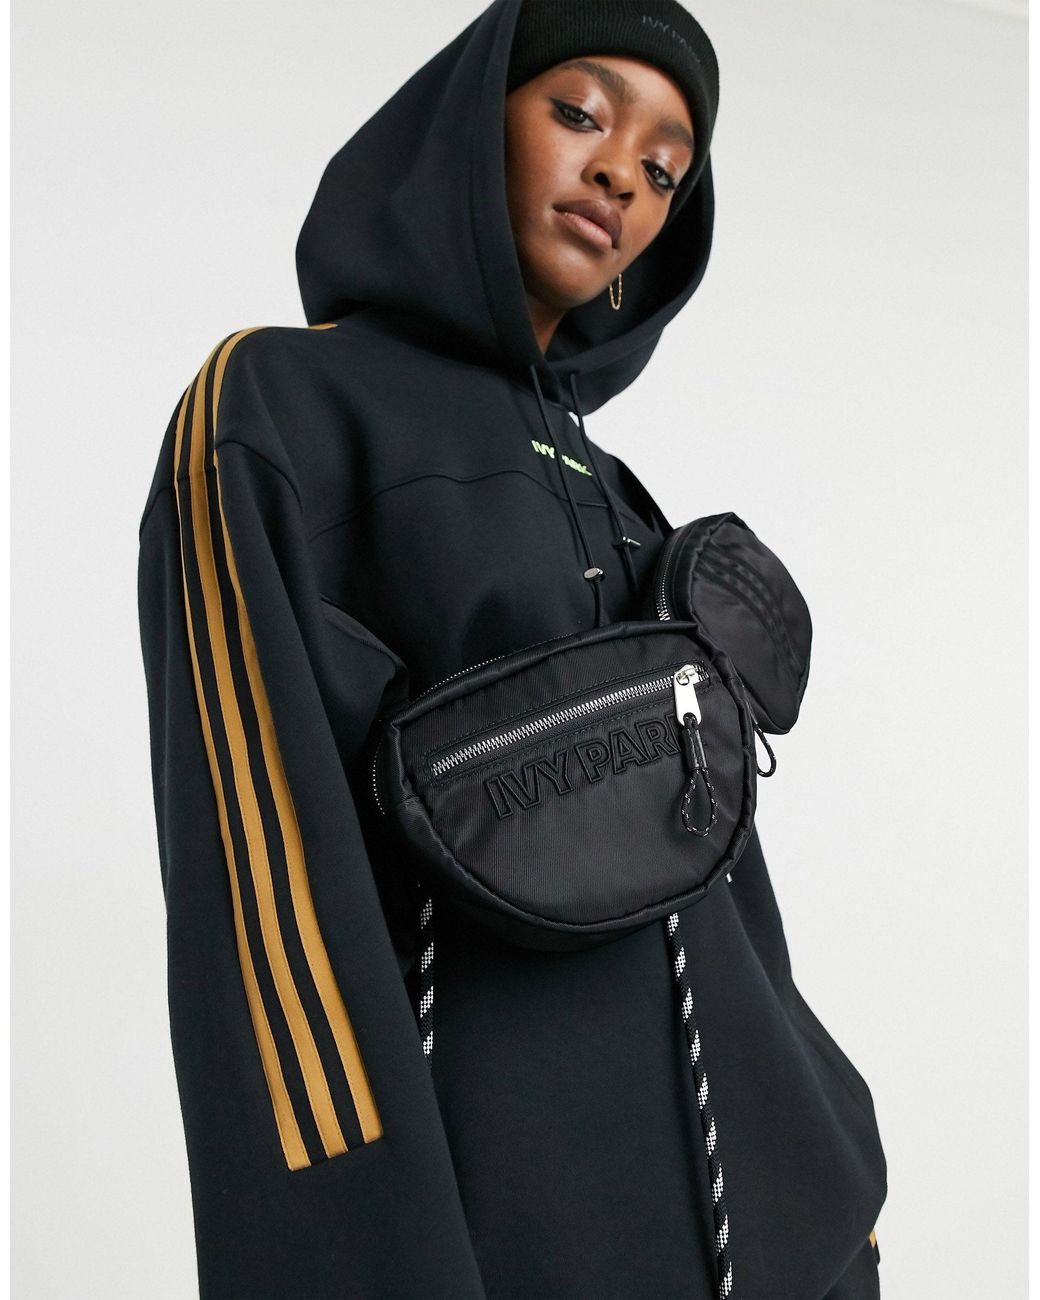 Ivy Park Adidas X Belt Bum Bag in Black | Lyst